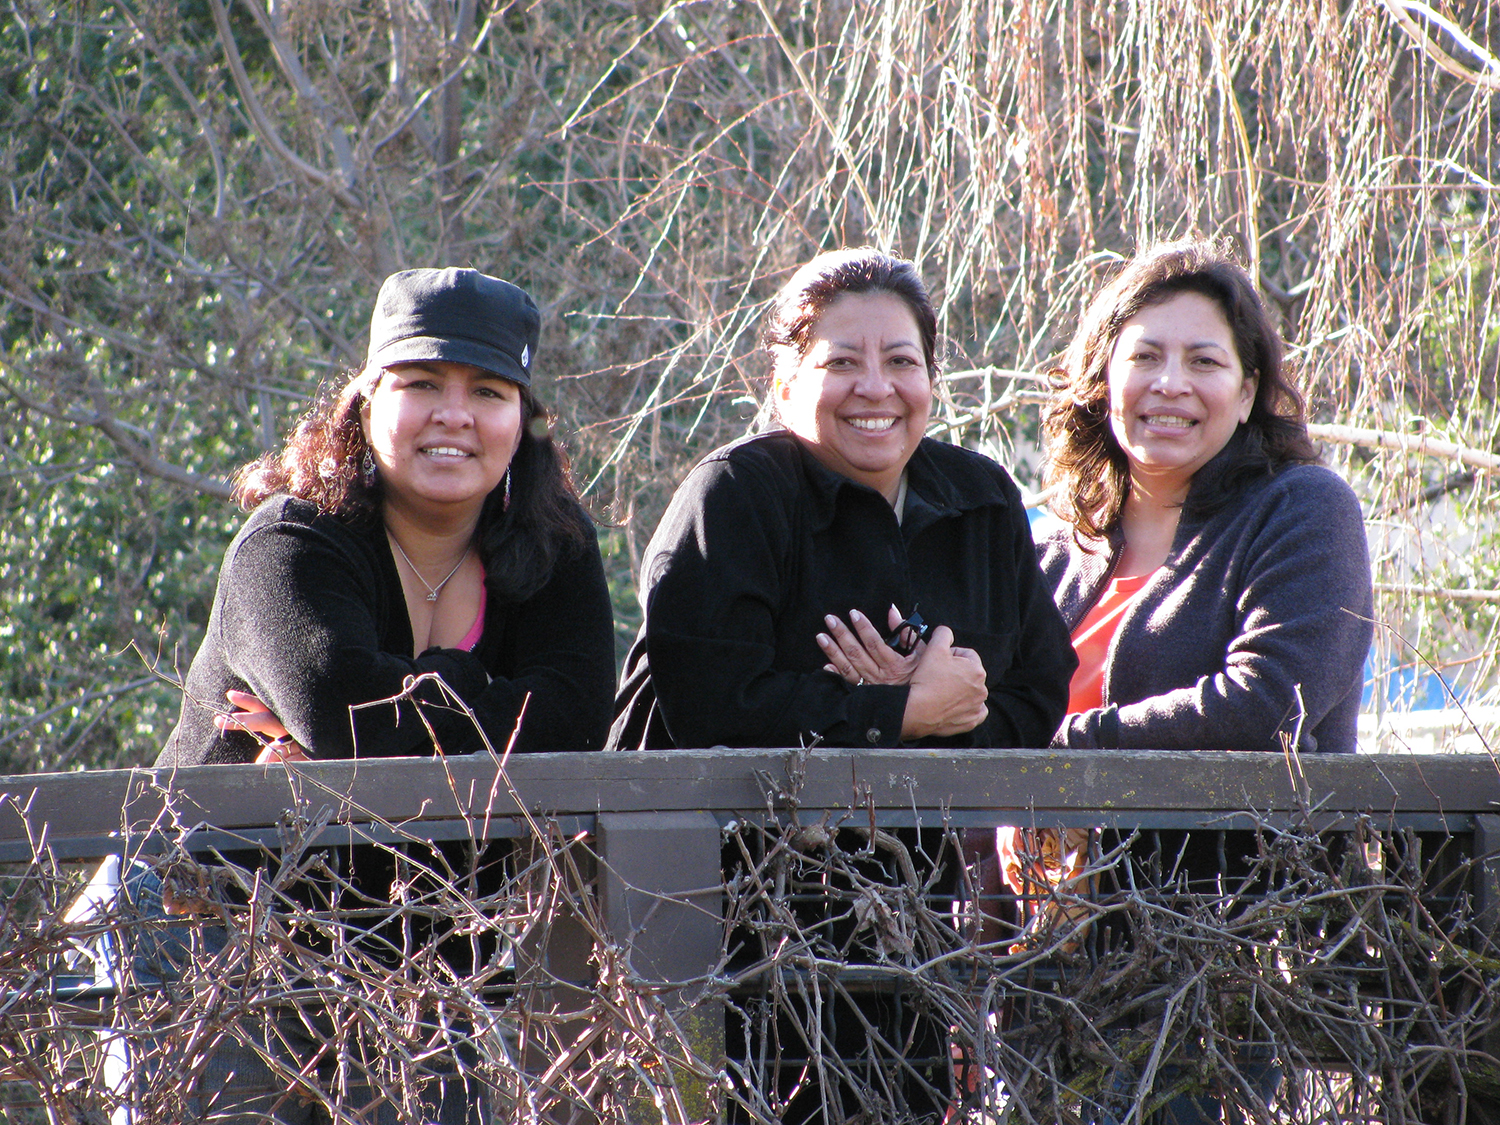 Left to right, Marian Moreno Lindo, Josephine Moreno and Felicia Moreno Morrison